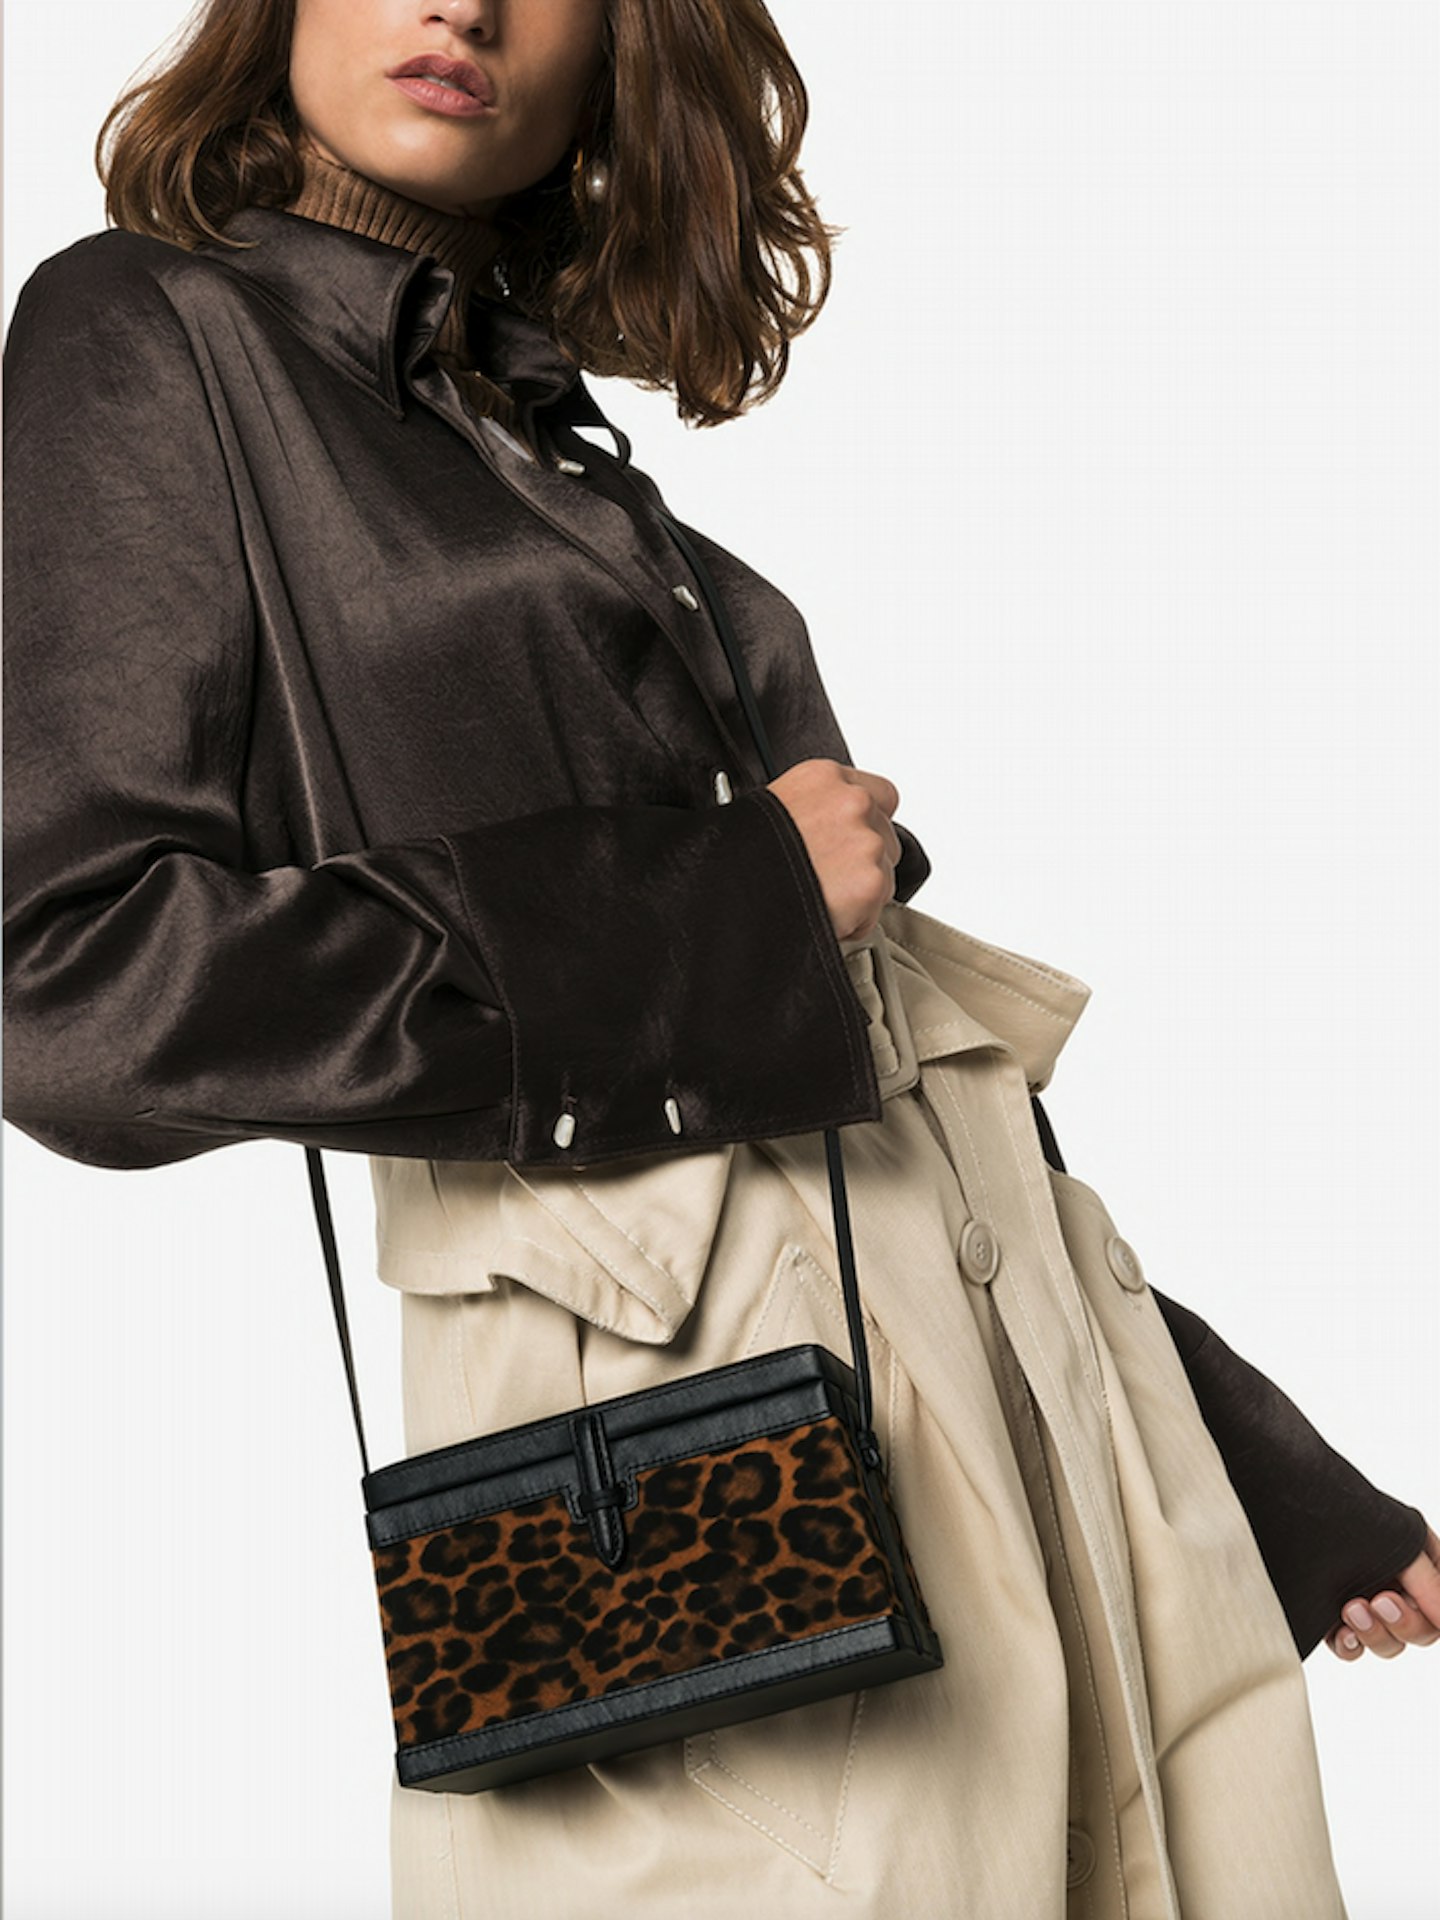 Hunting Season, Brown Leopard Print Trunk Bag, £615